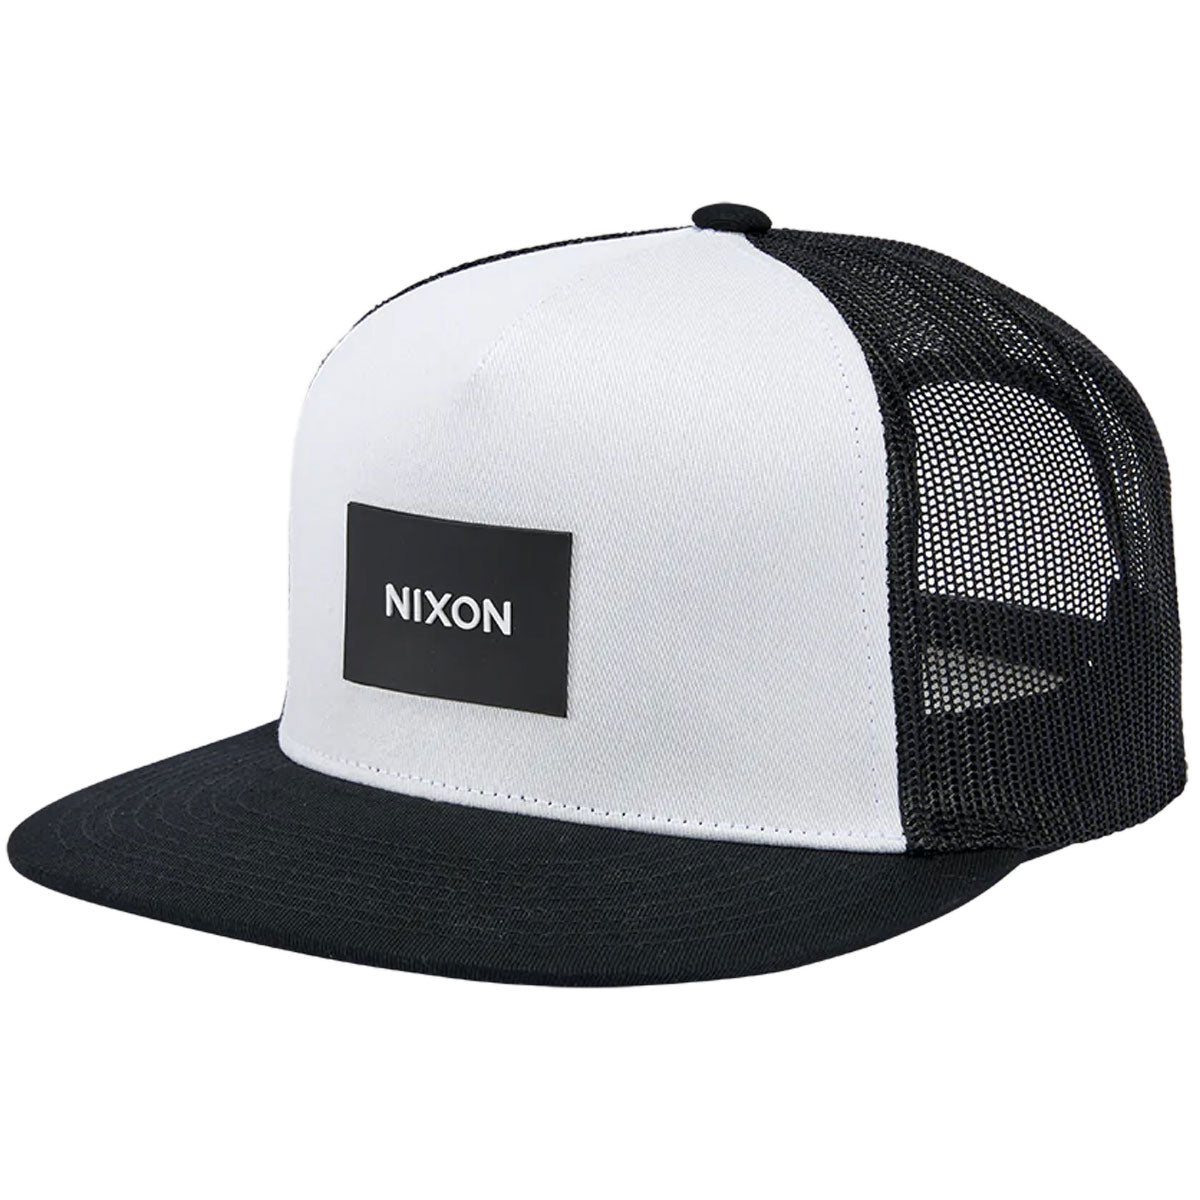 Nixon Team Trucker Hat - White/Black/Black image 1